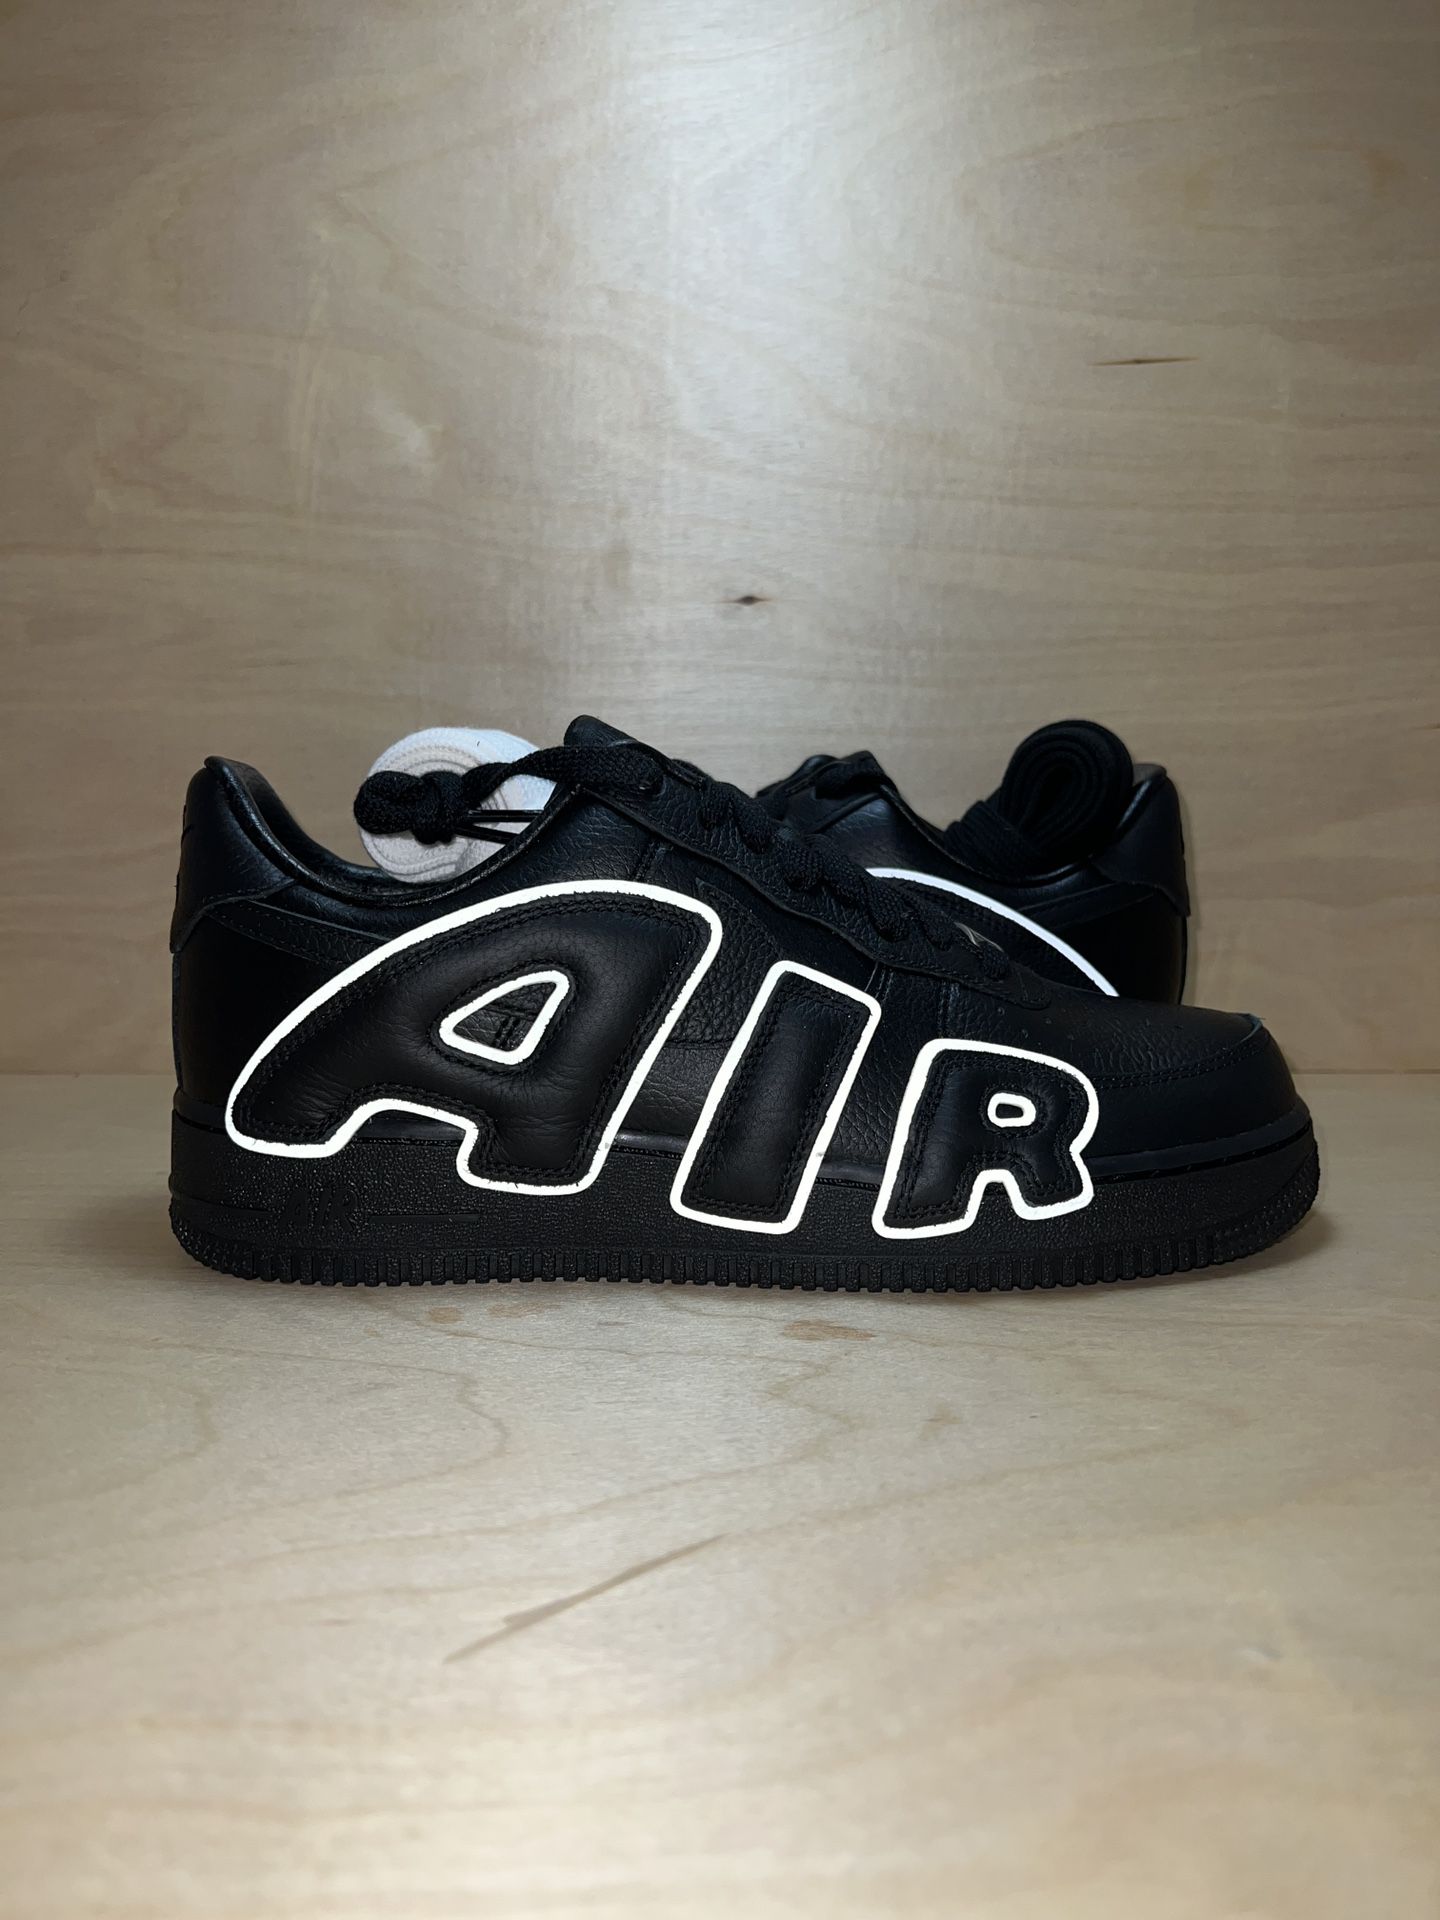 Nike Air Force 1 Low CPFM “Black” (US 8.5)